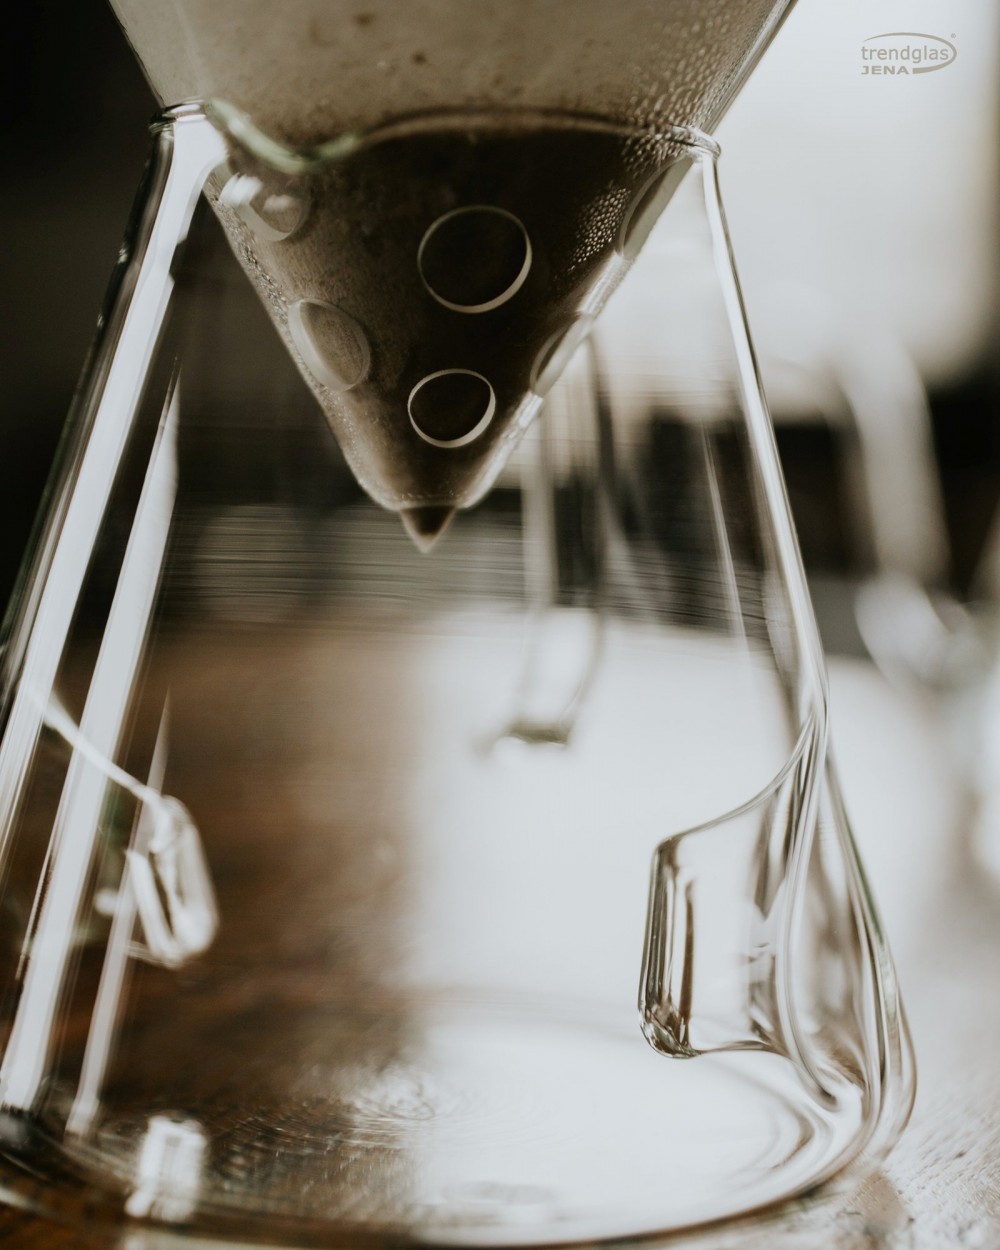 Cafetera de goteo en vidrio de borosilicato Bari Trendglas Jena